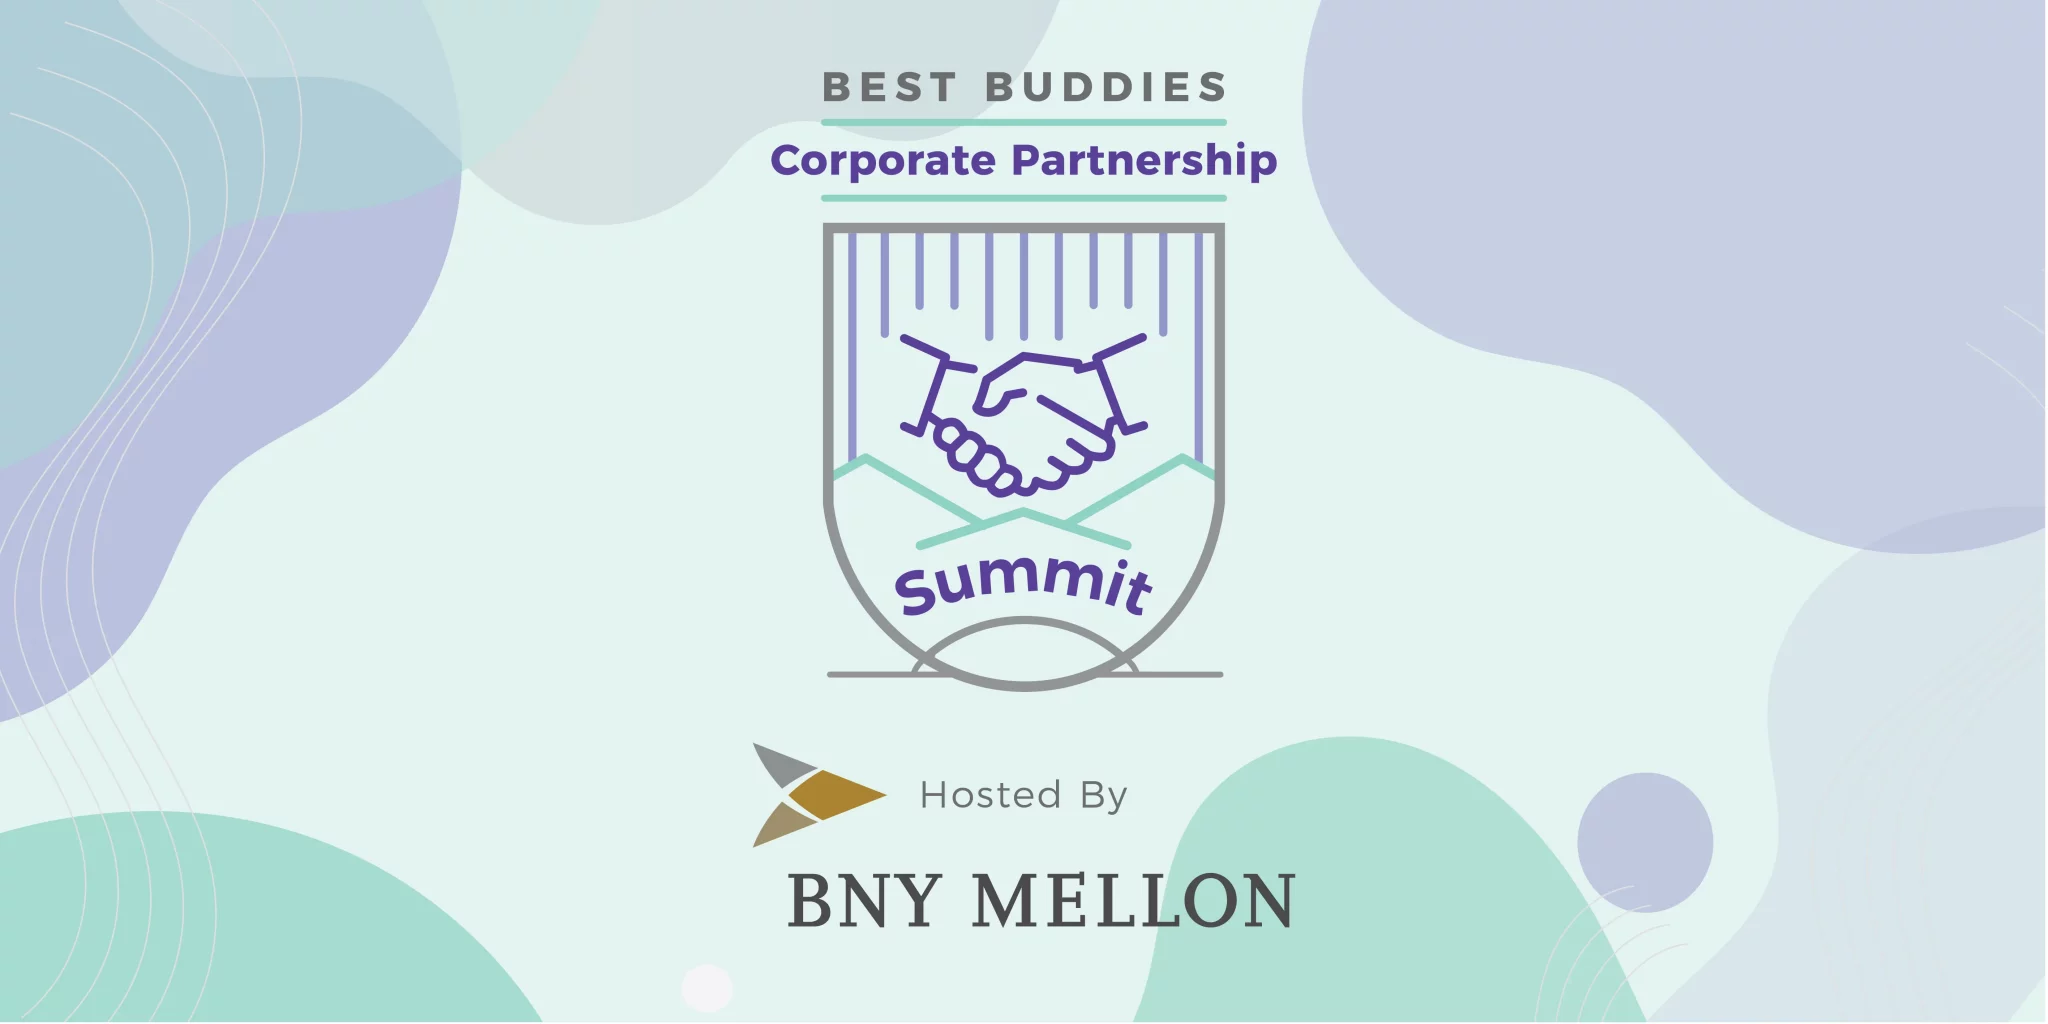 Best Buddies Corporate Partnership Summit